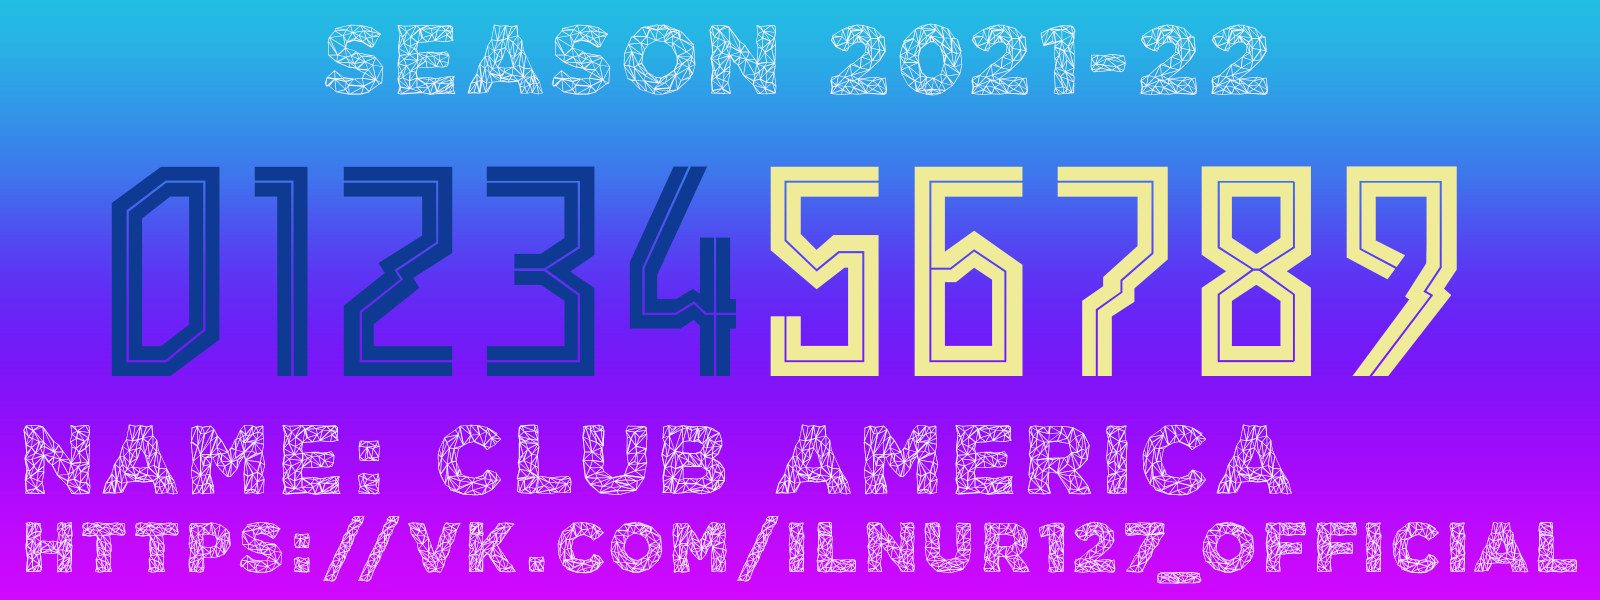 Club America 2021-22 (kitnumbers).png